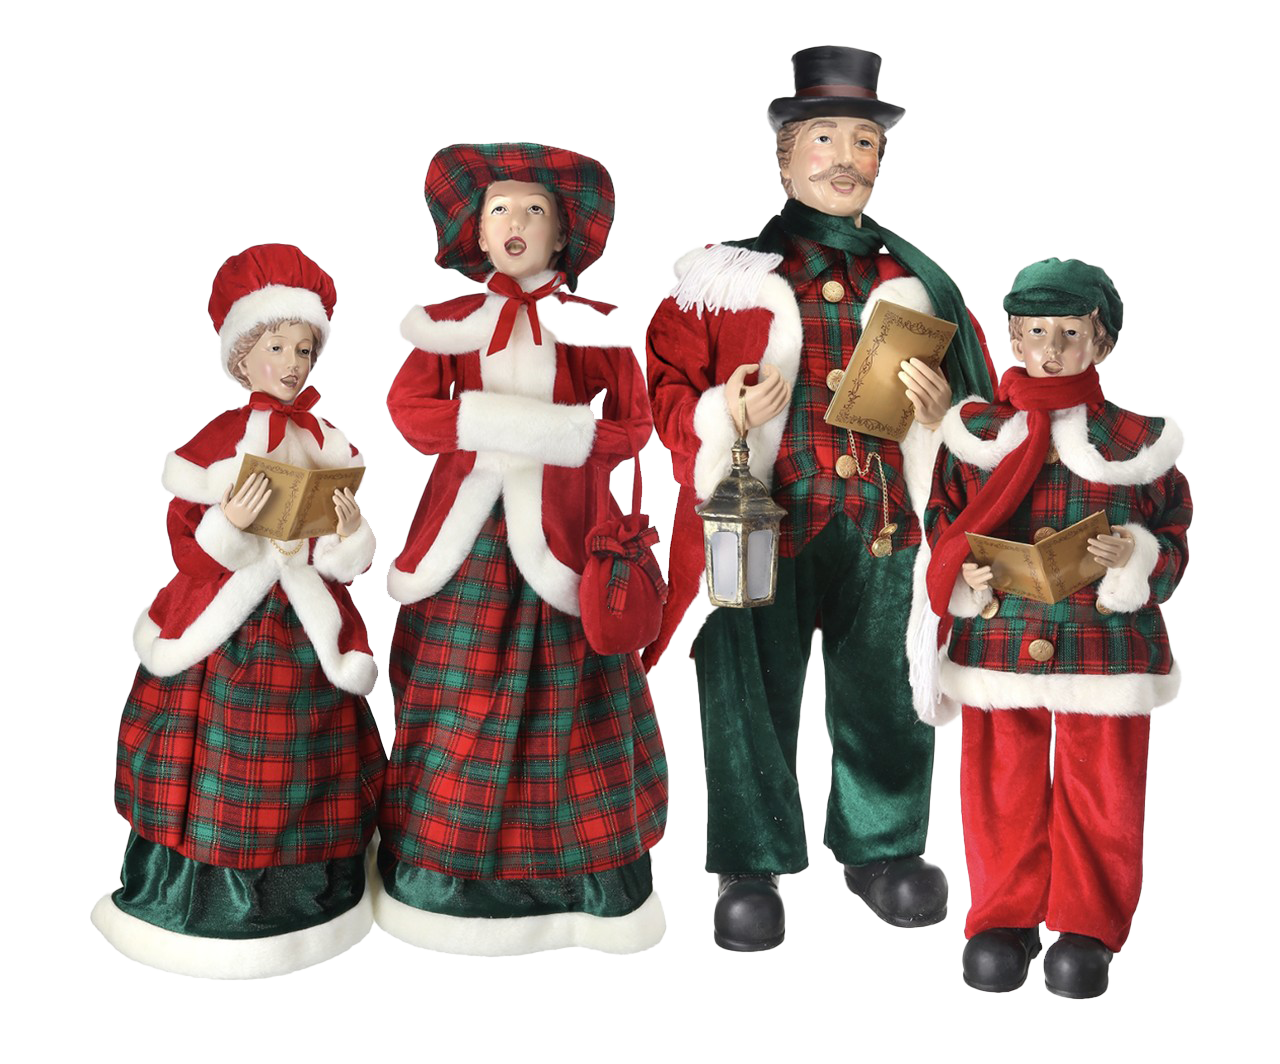 Download PNG image - Christmas Caroling Transparent Images PNG 